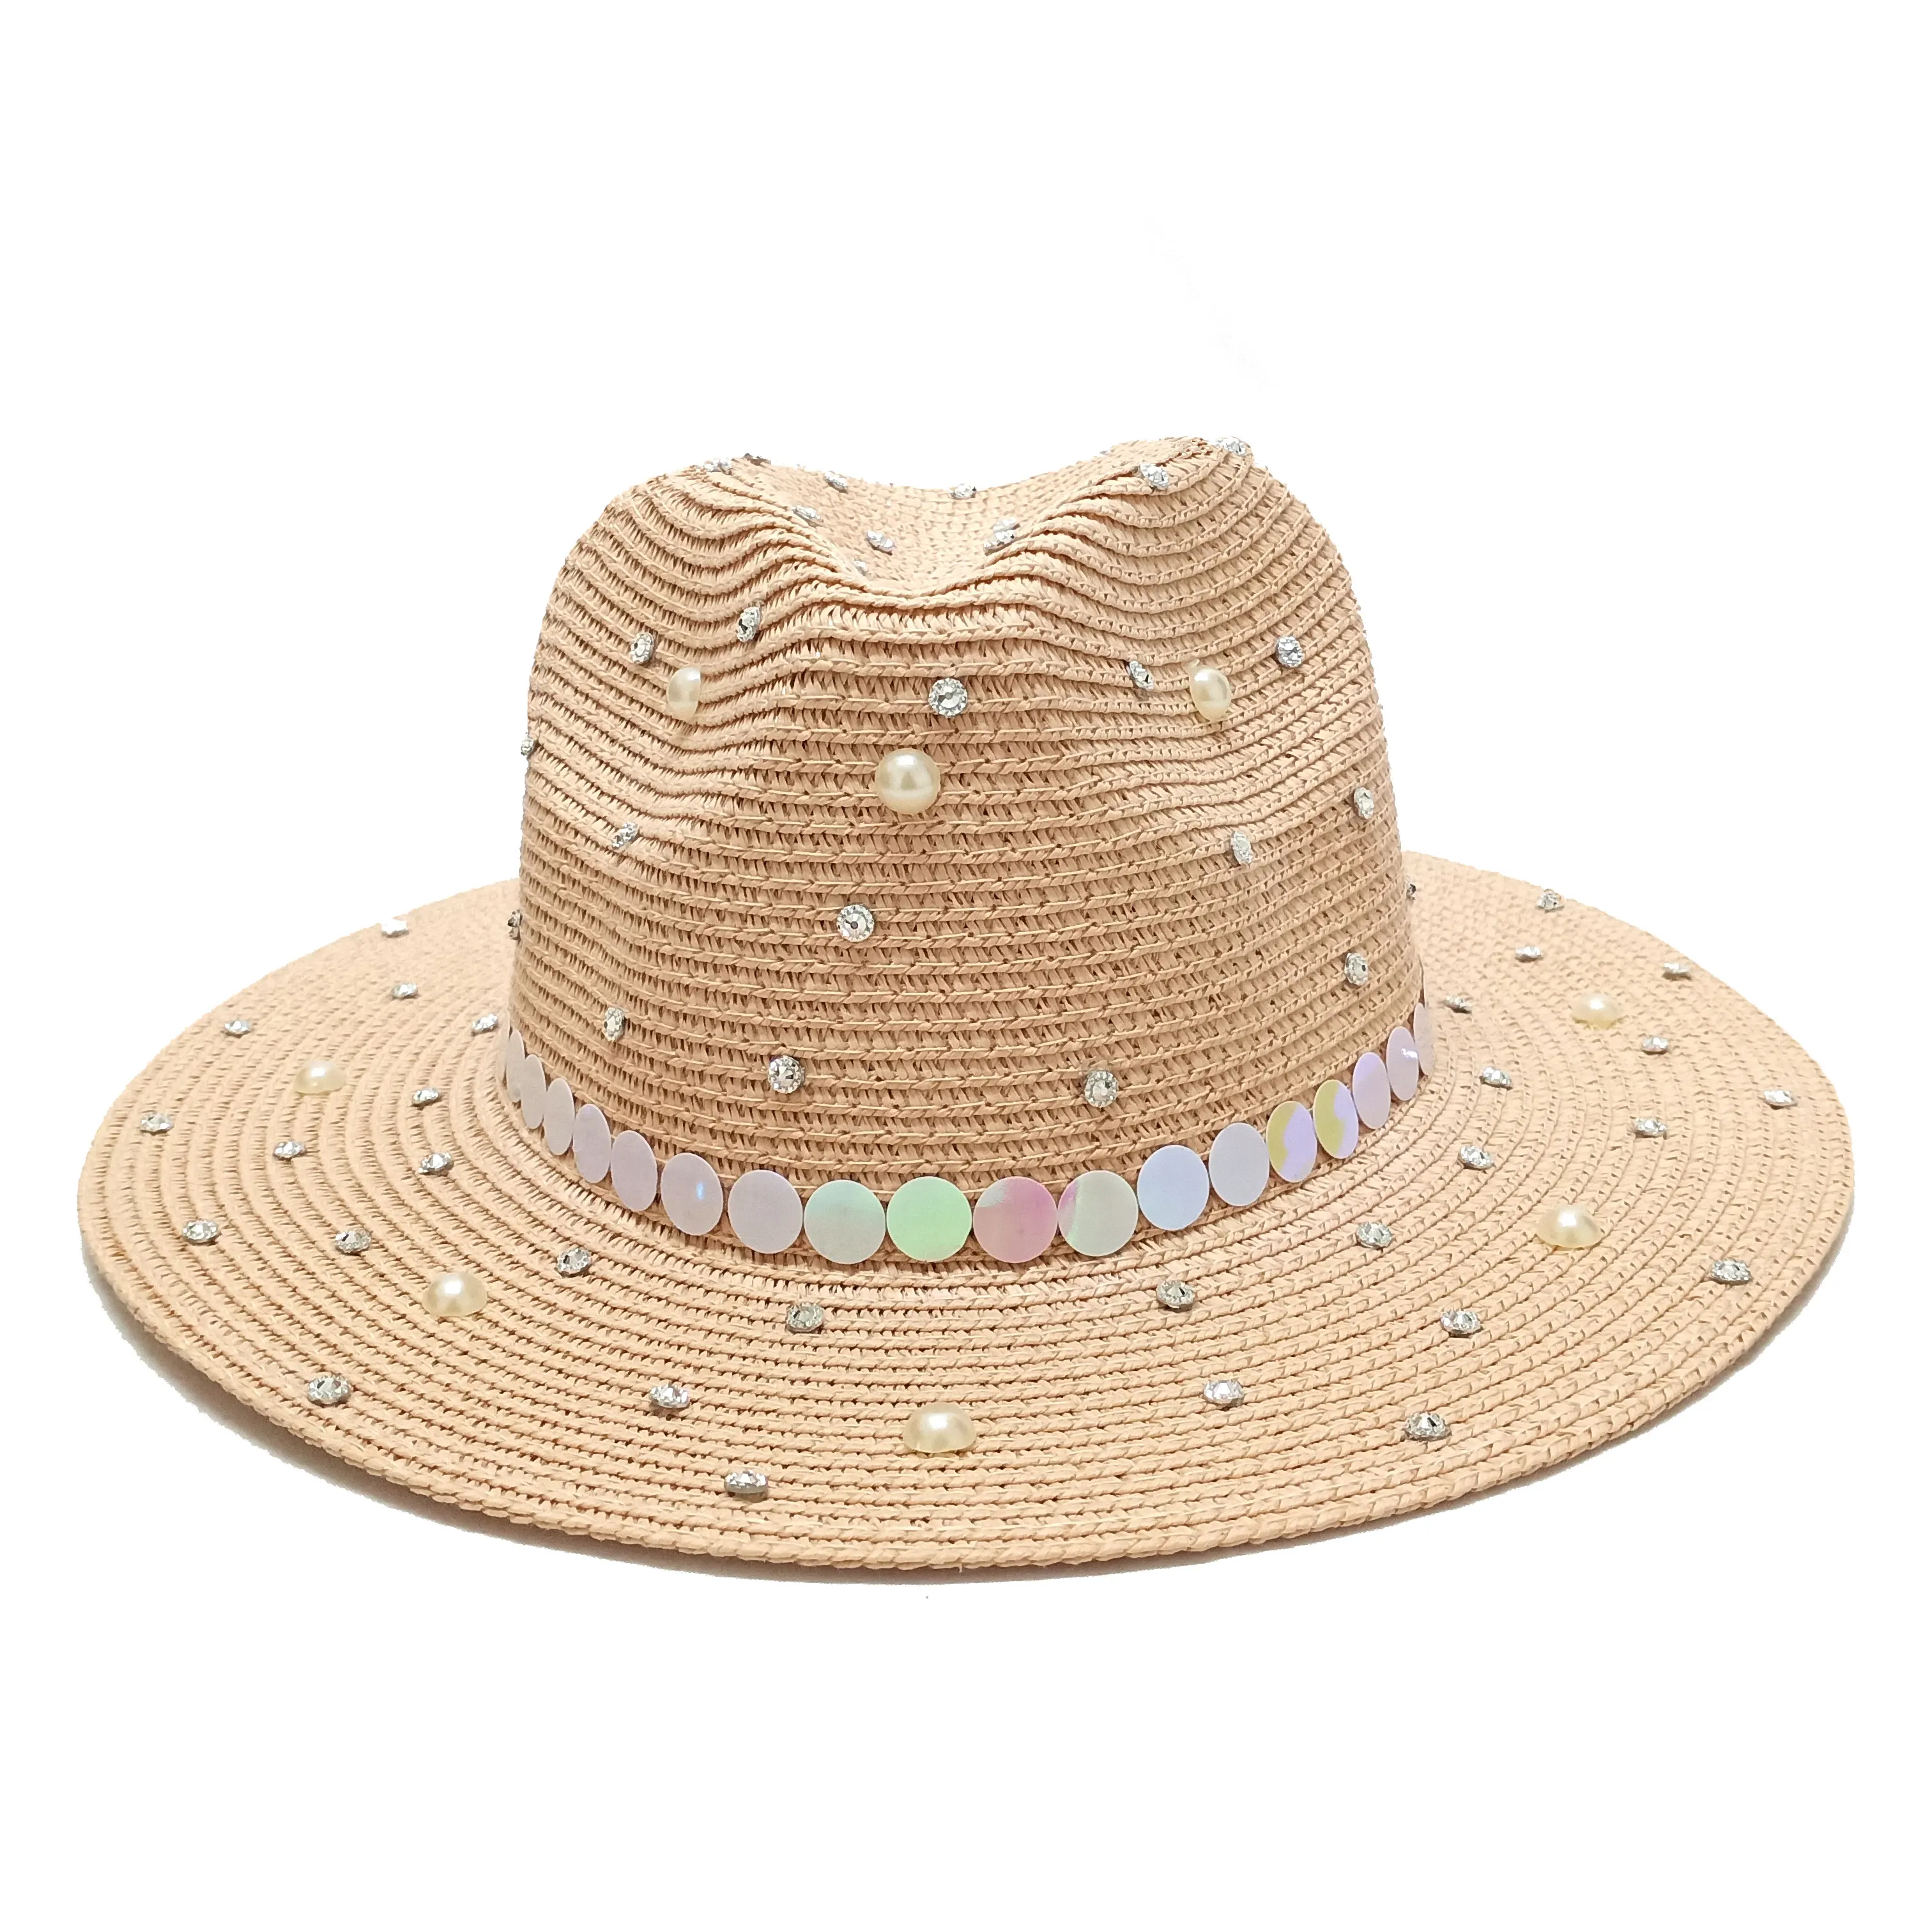 SUN Hat Straw Hat Pearl Bright Diamond Women's Hat Summer Outdoor Travel Beach Vacation Seaside Sun Hat Sunhat Bucket Hat 2021 2